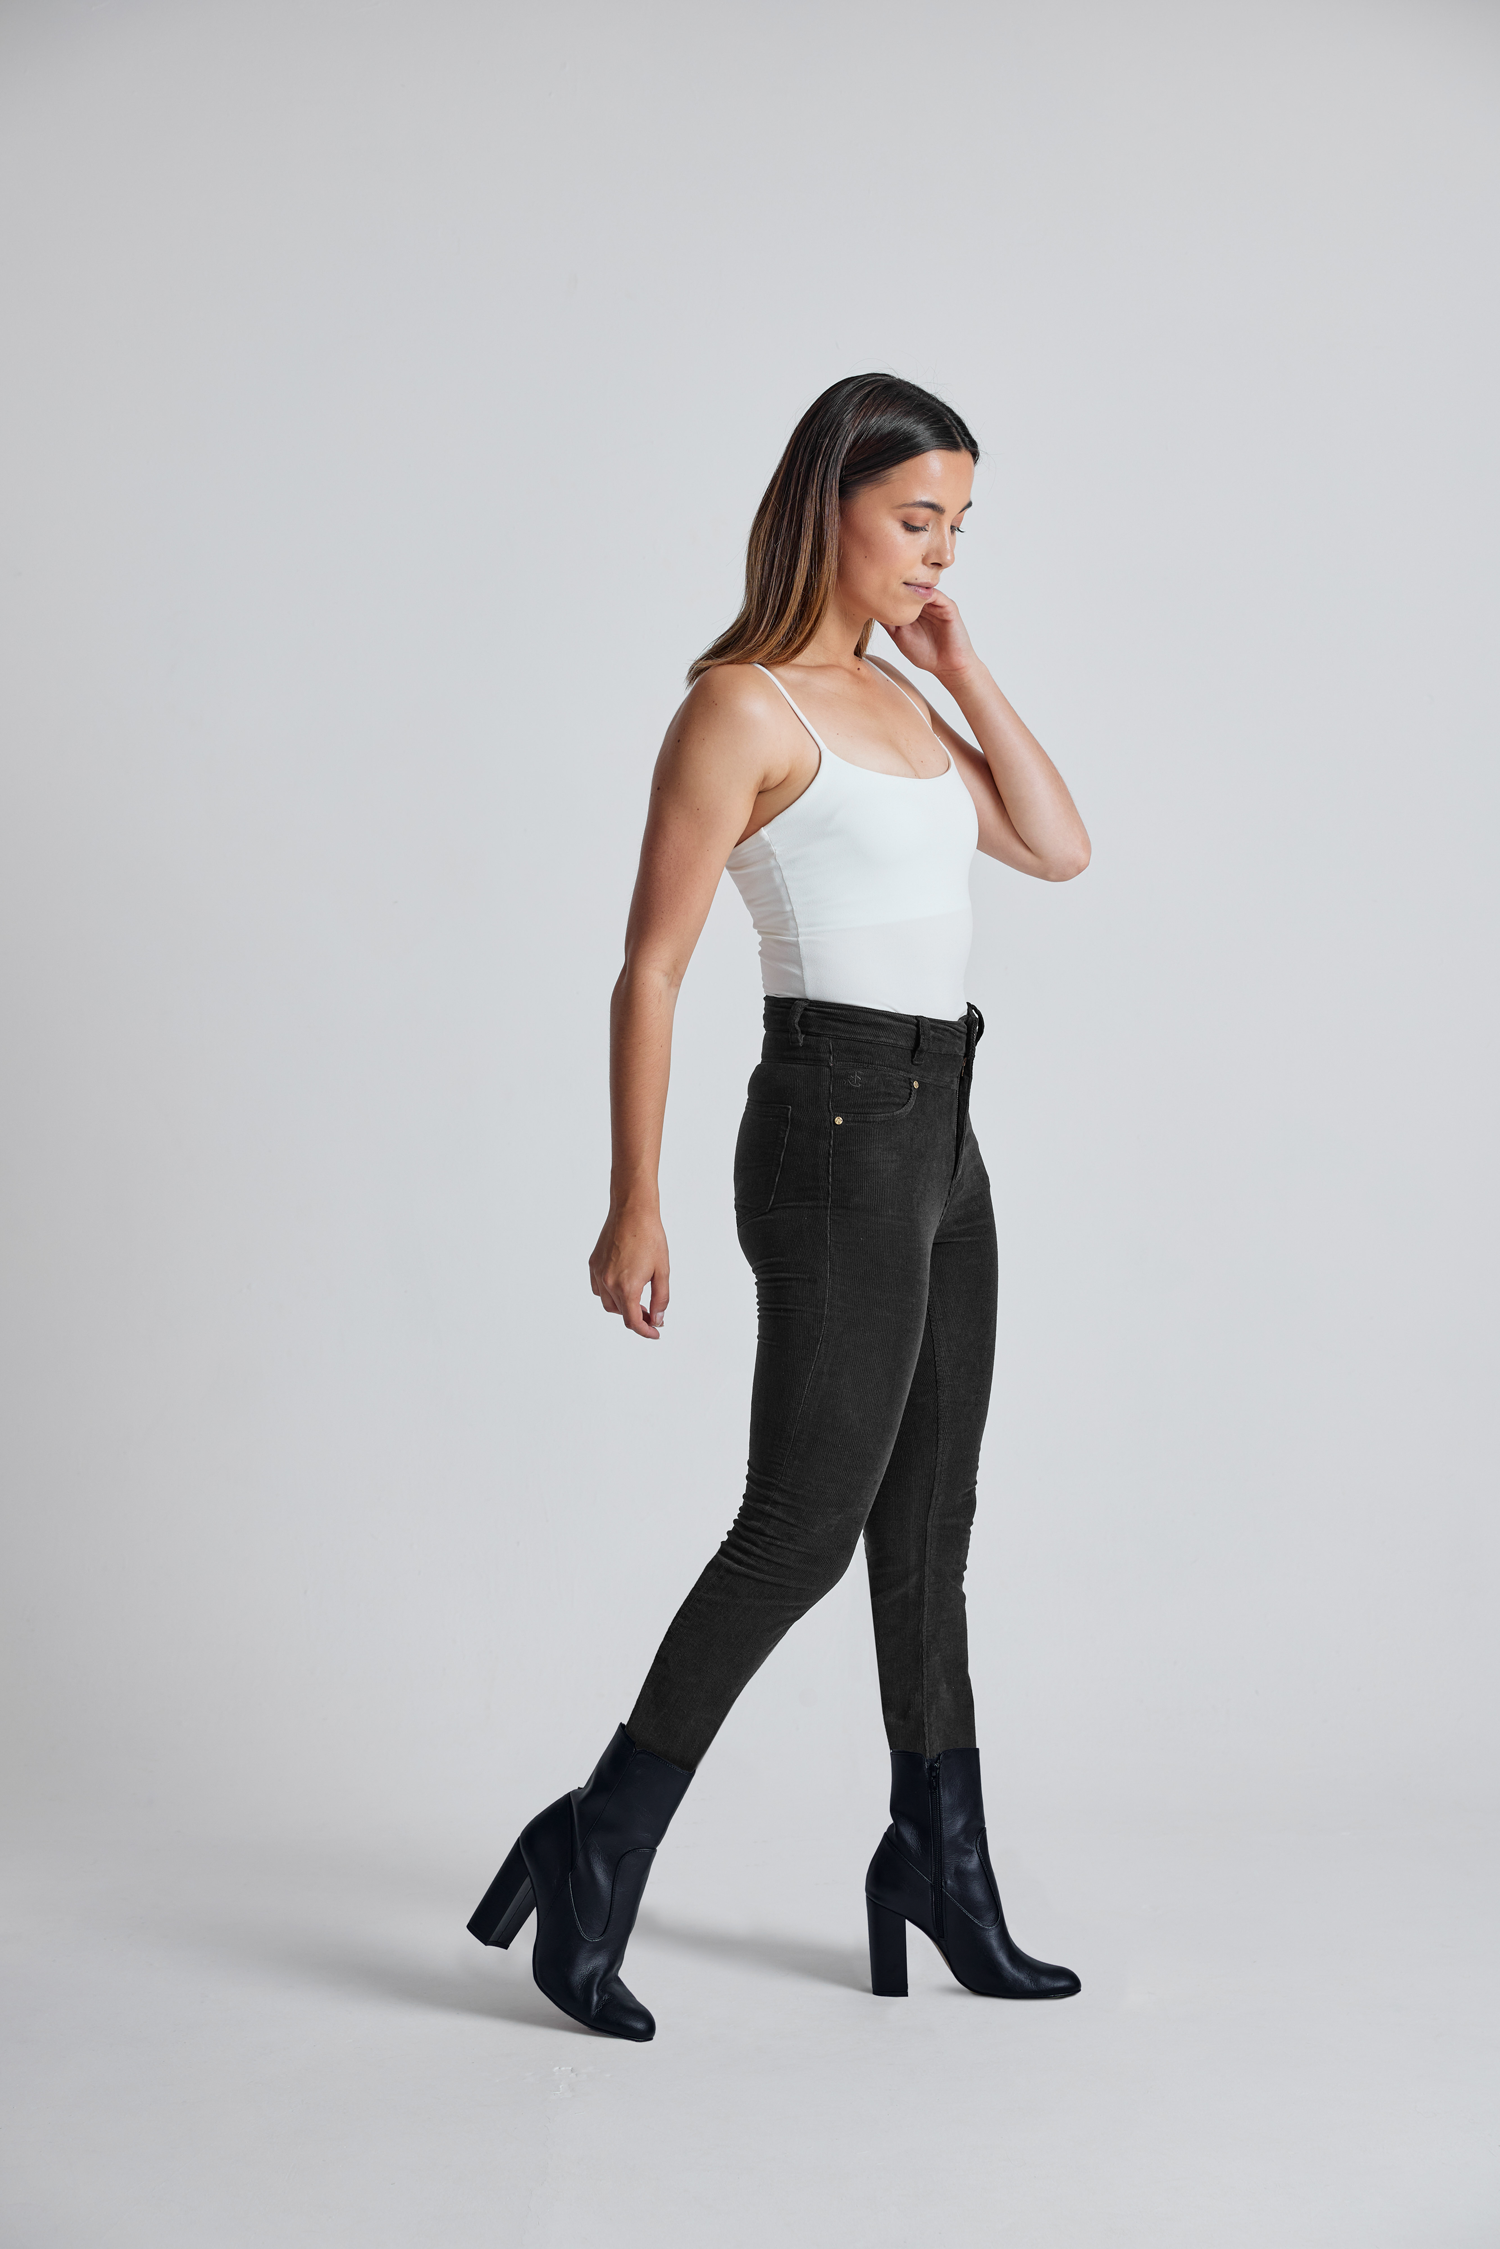 NINA Black - GOTS Organic Cotton Cord High Waist Skinny Jean by Flax & Loo, 33" / Regular